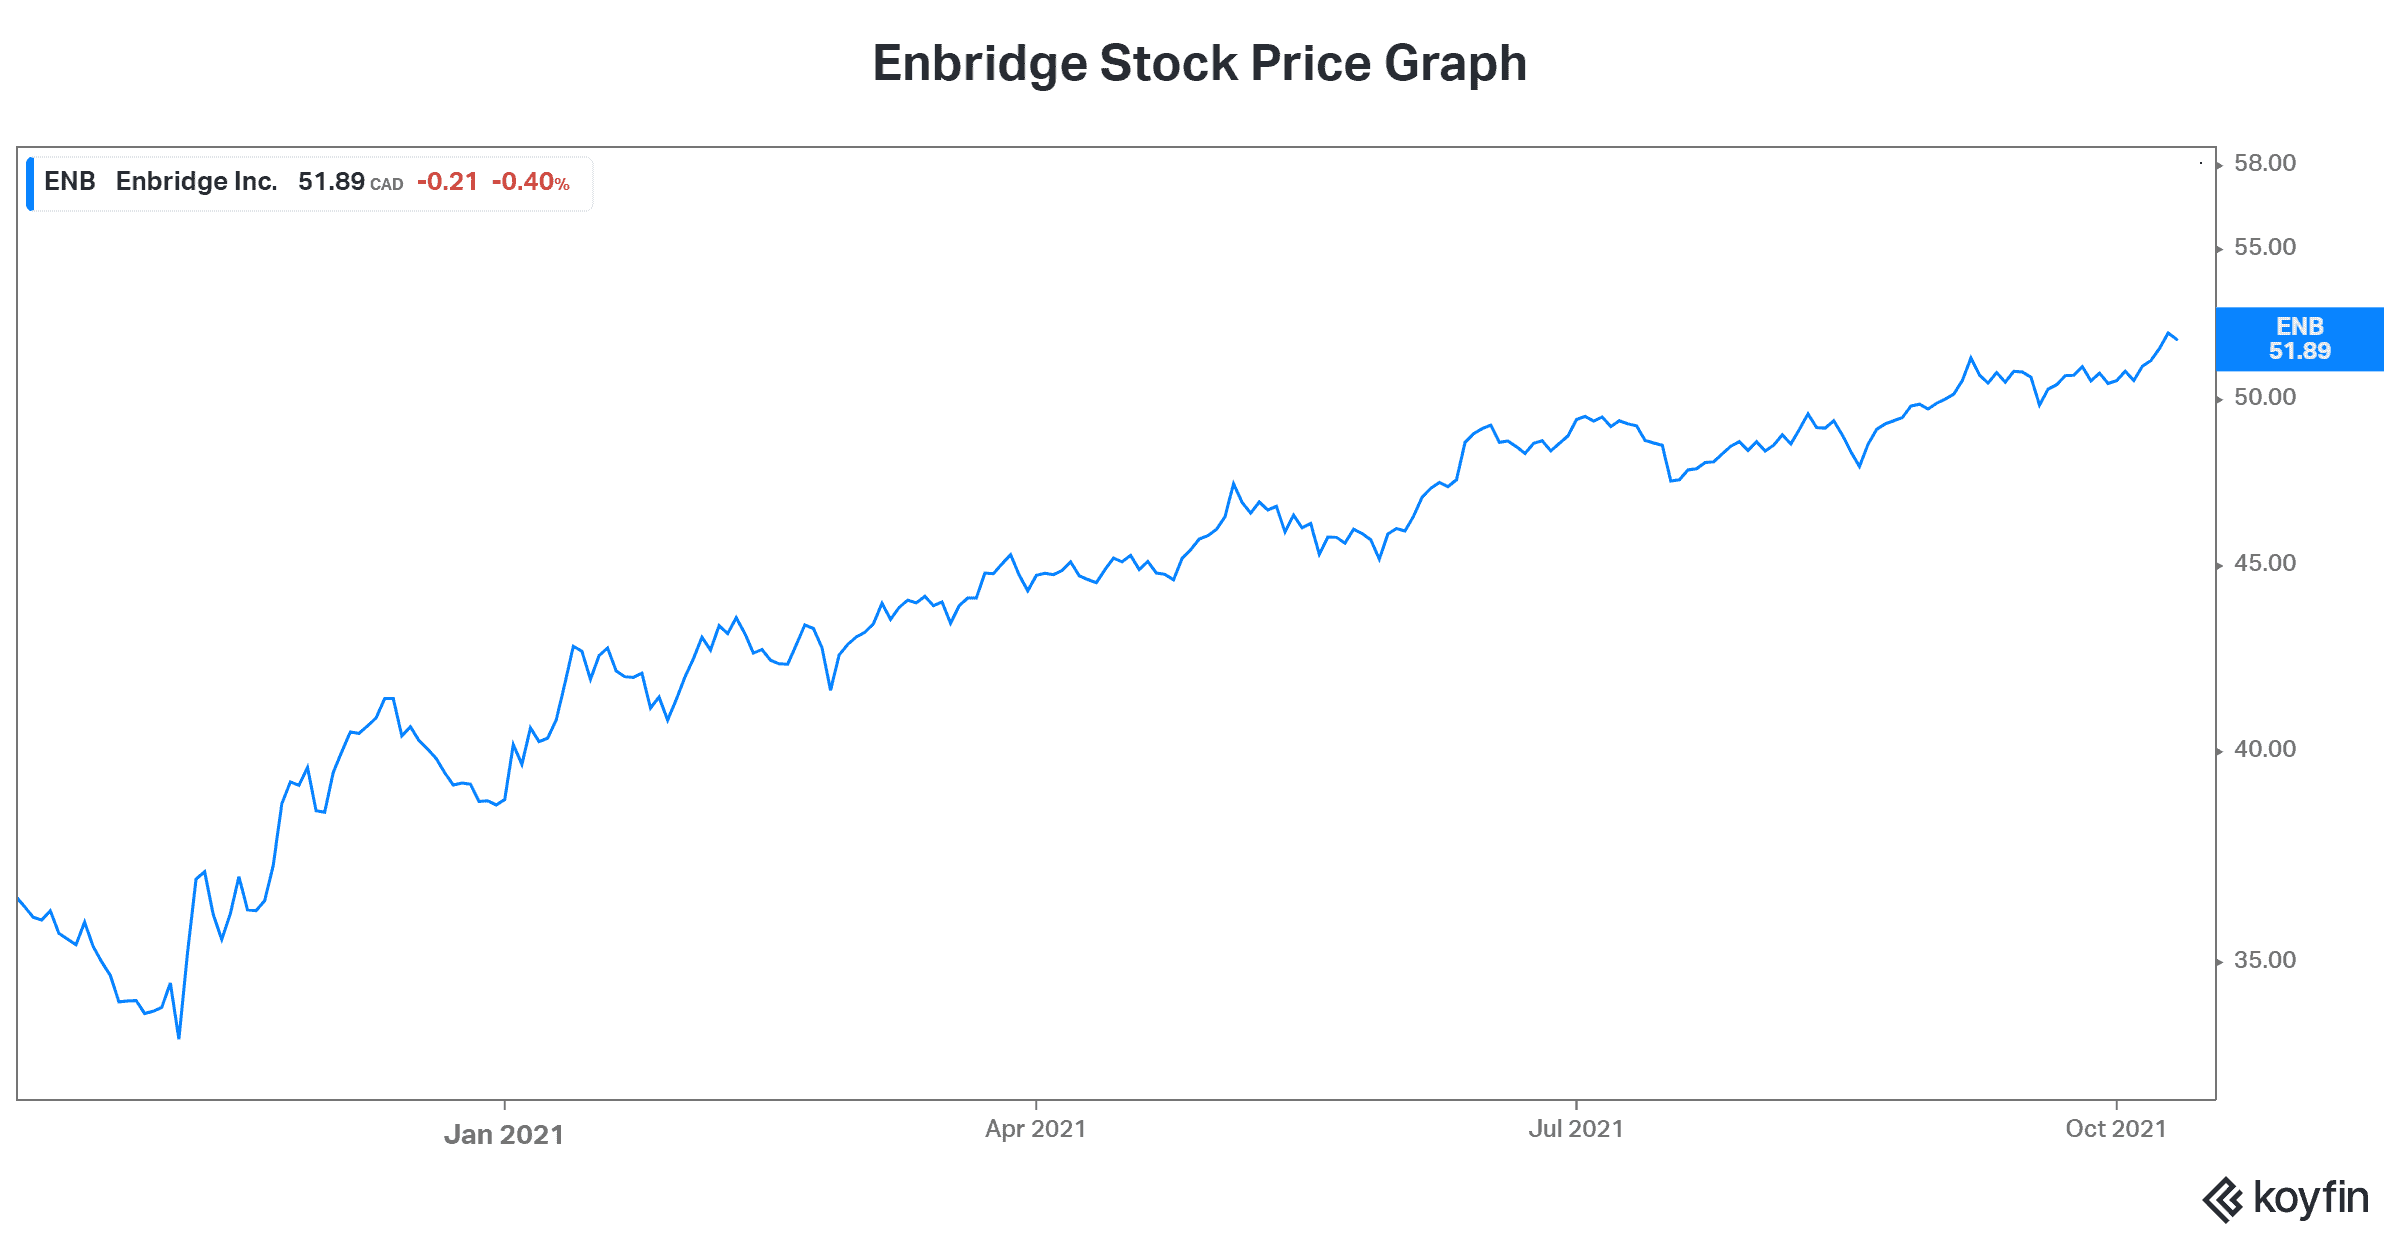 Enbridge stock dividend yield